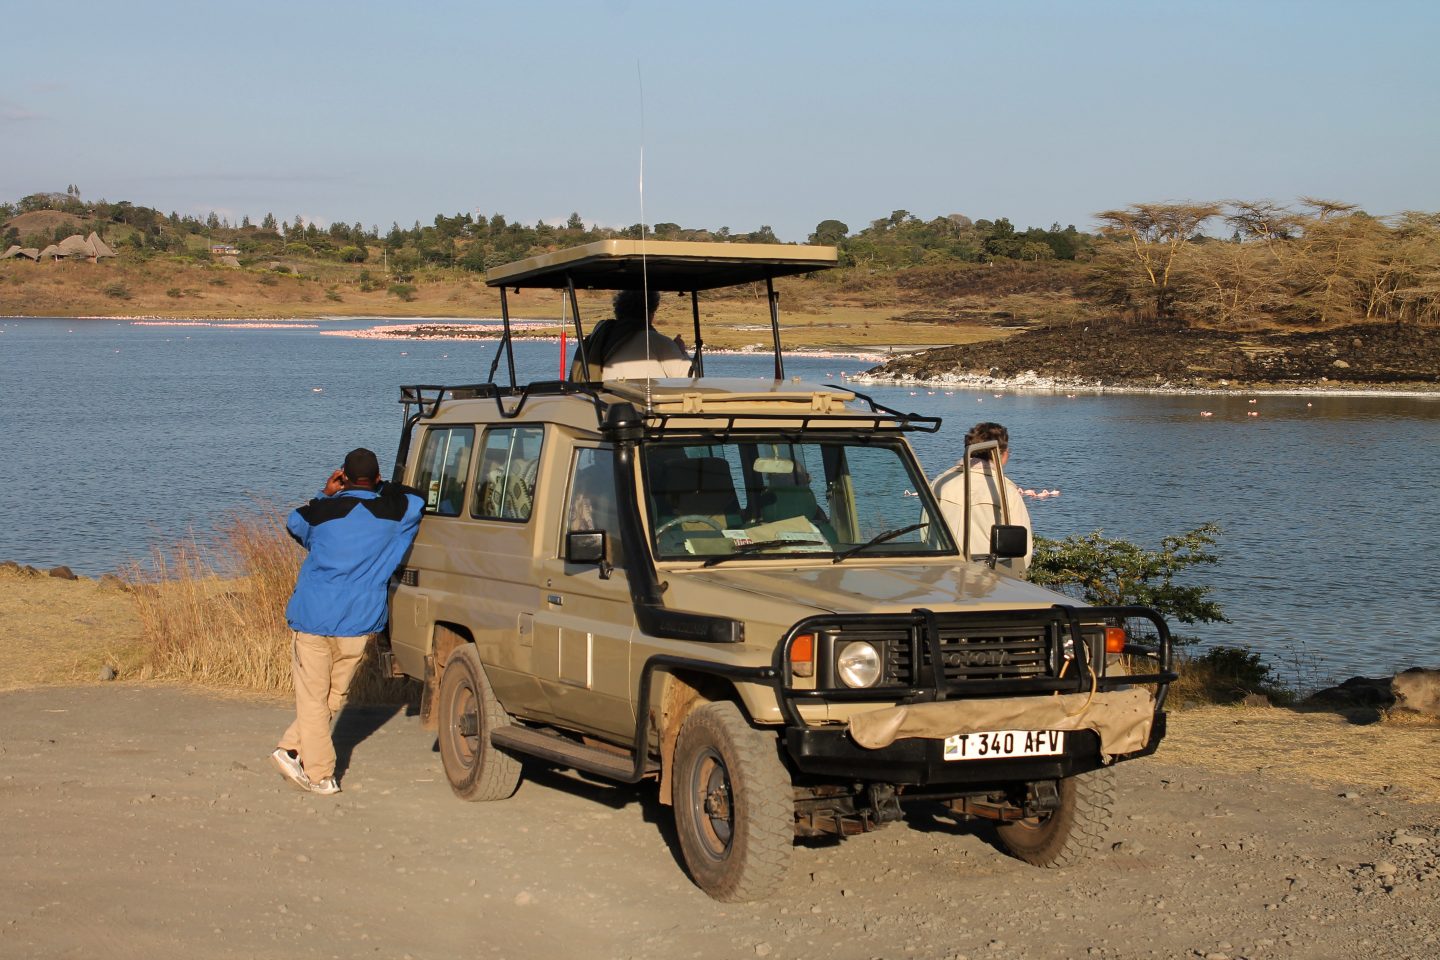 Reiservaringen Tanzania